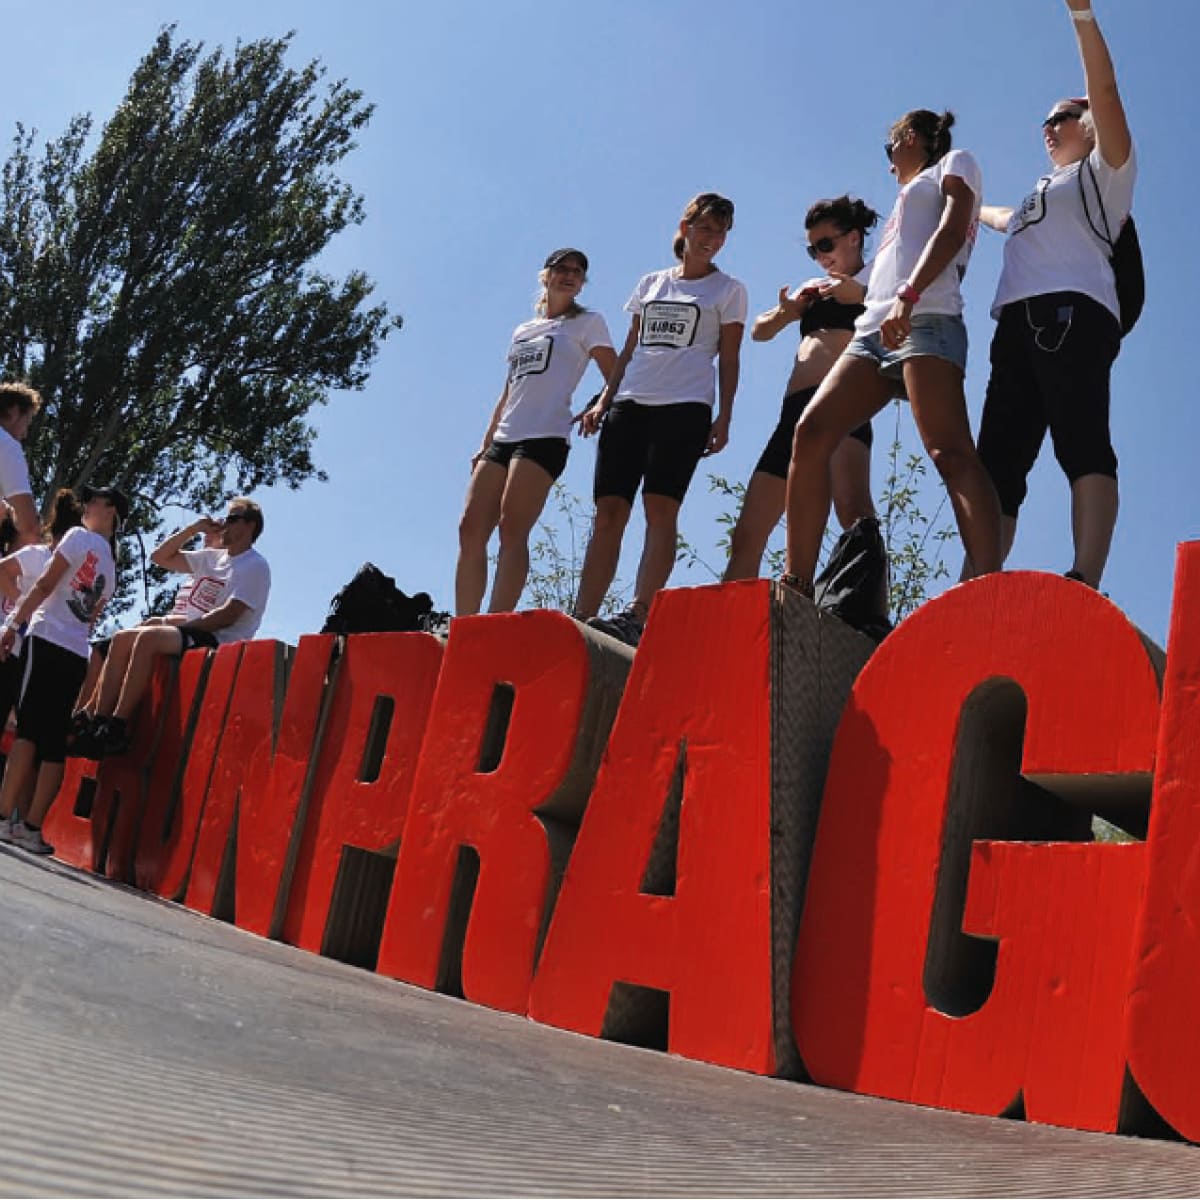 People standing on huge letters saying "We run Prague"